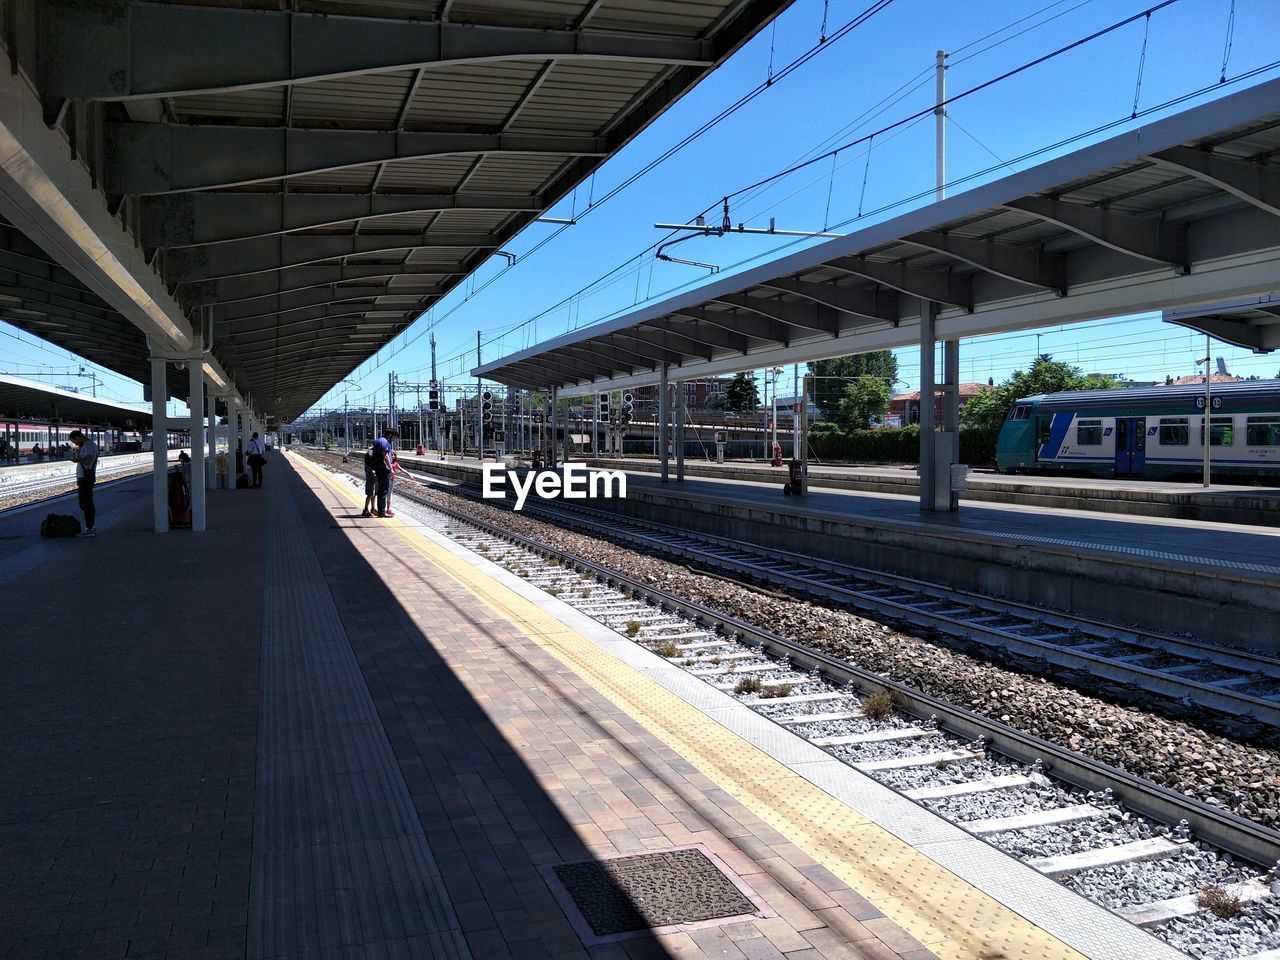 TRAIN AT RAILROAD STATION PLATFORM AGAINST CLEAR SKY